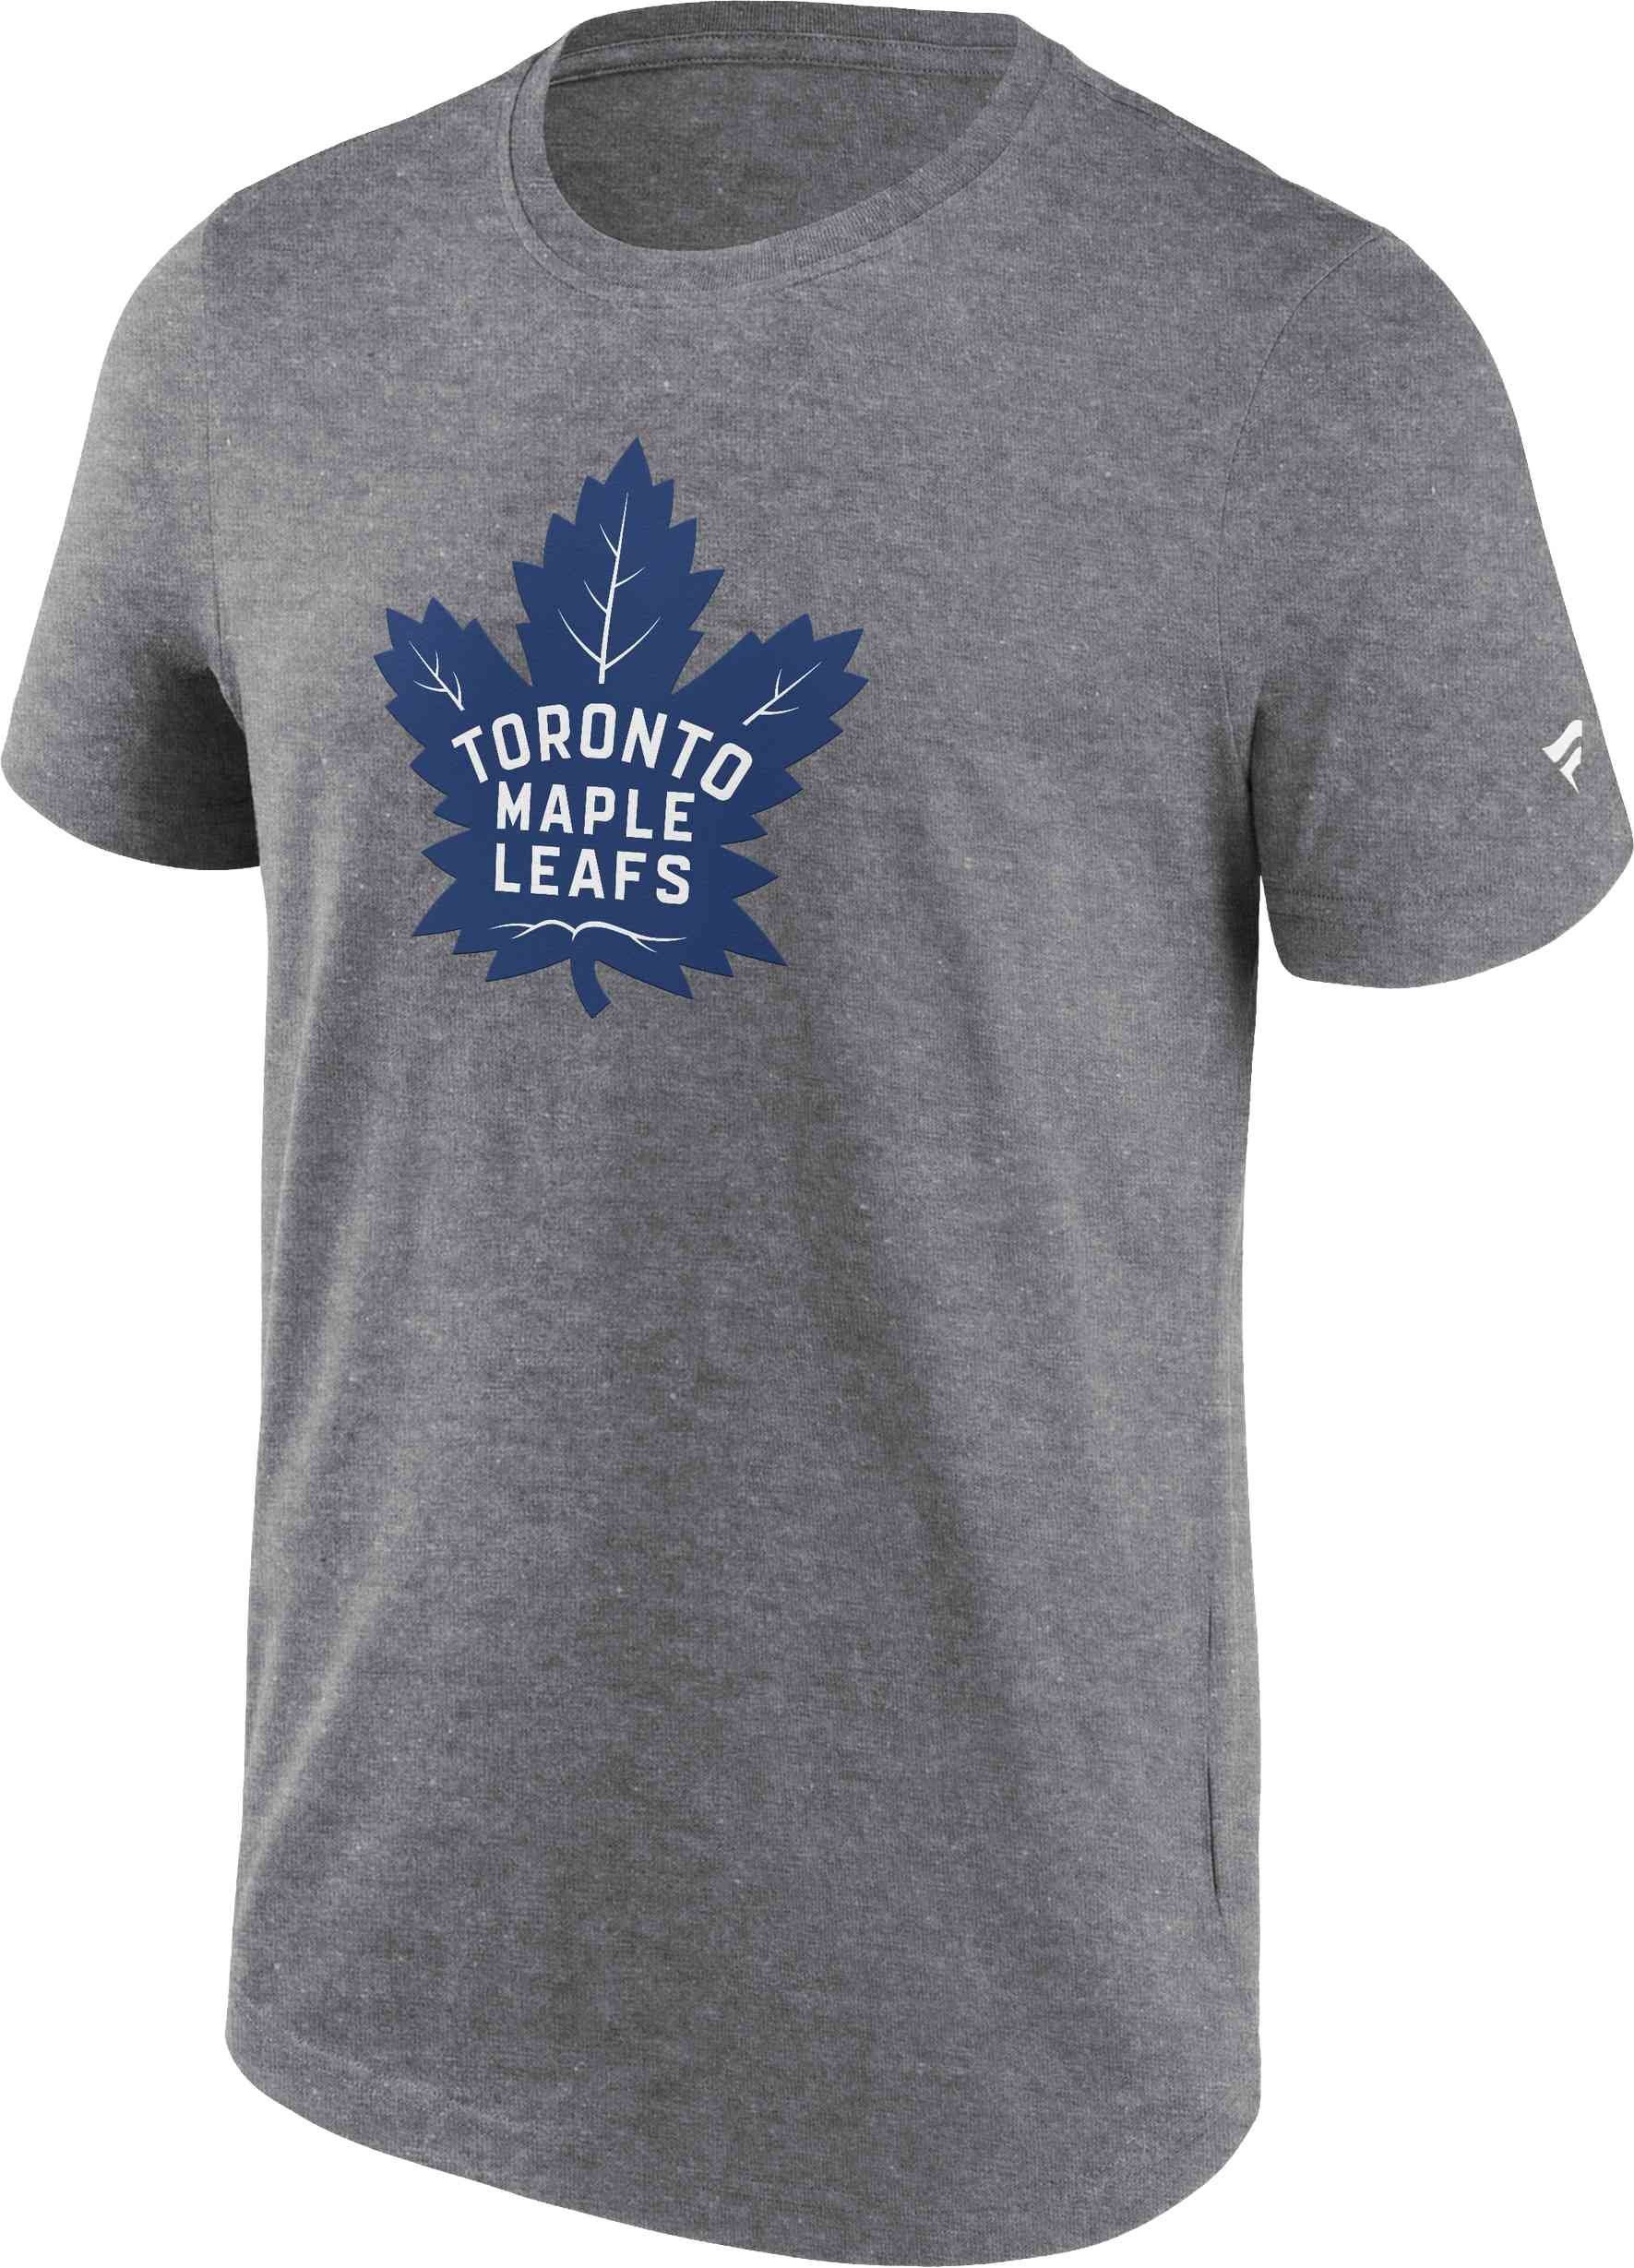 Logo Leafs NHL Graphic Maple T-Shirt Primary Toronto Fanatics